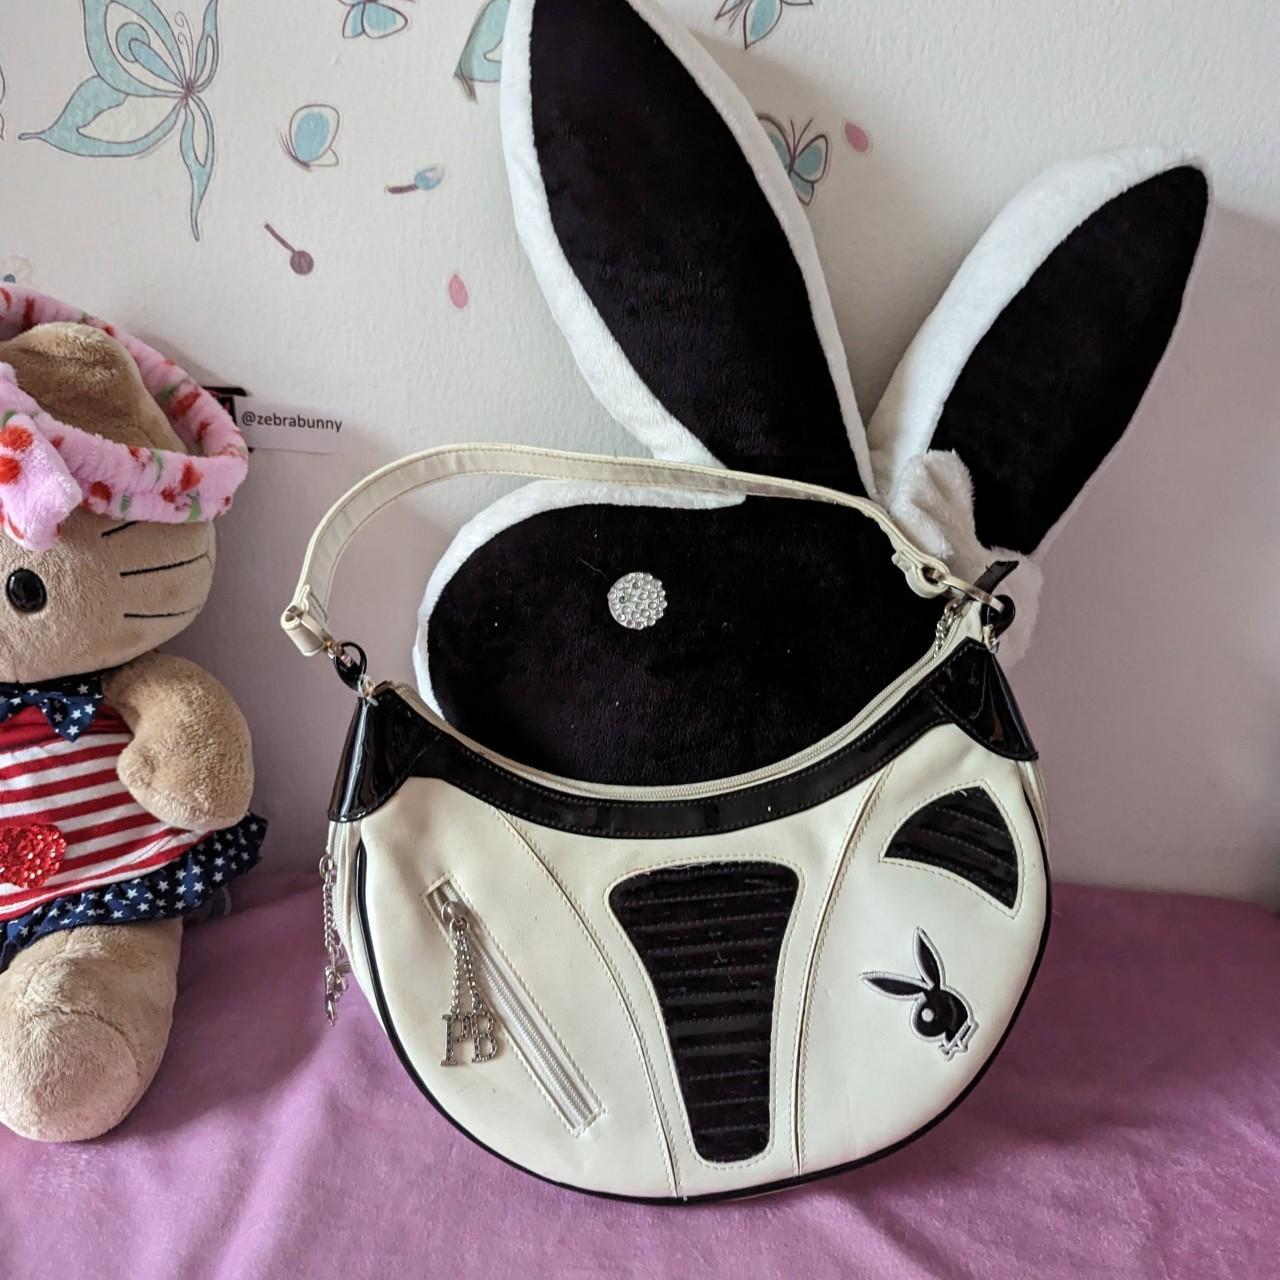 Playboy Bunny Bag | eBay